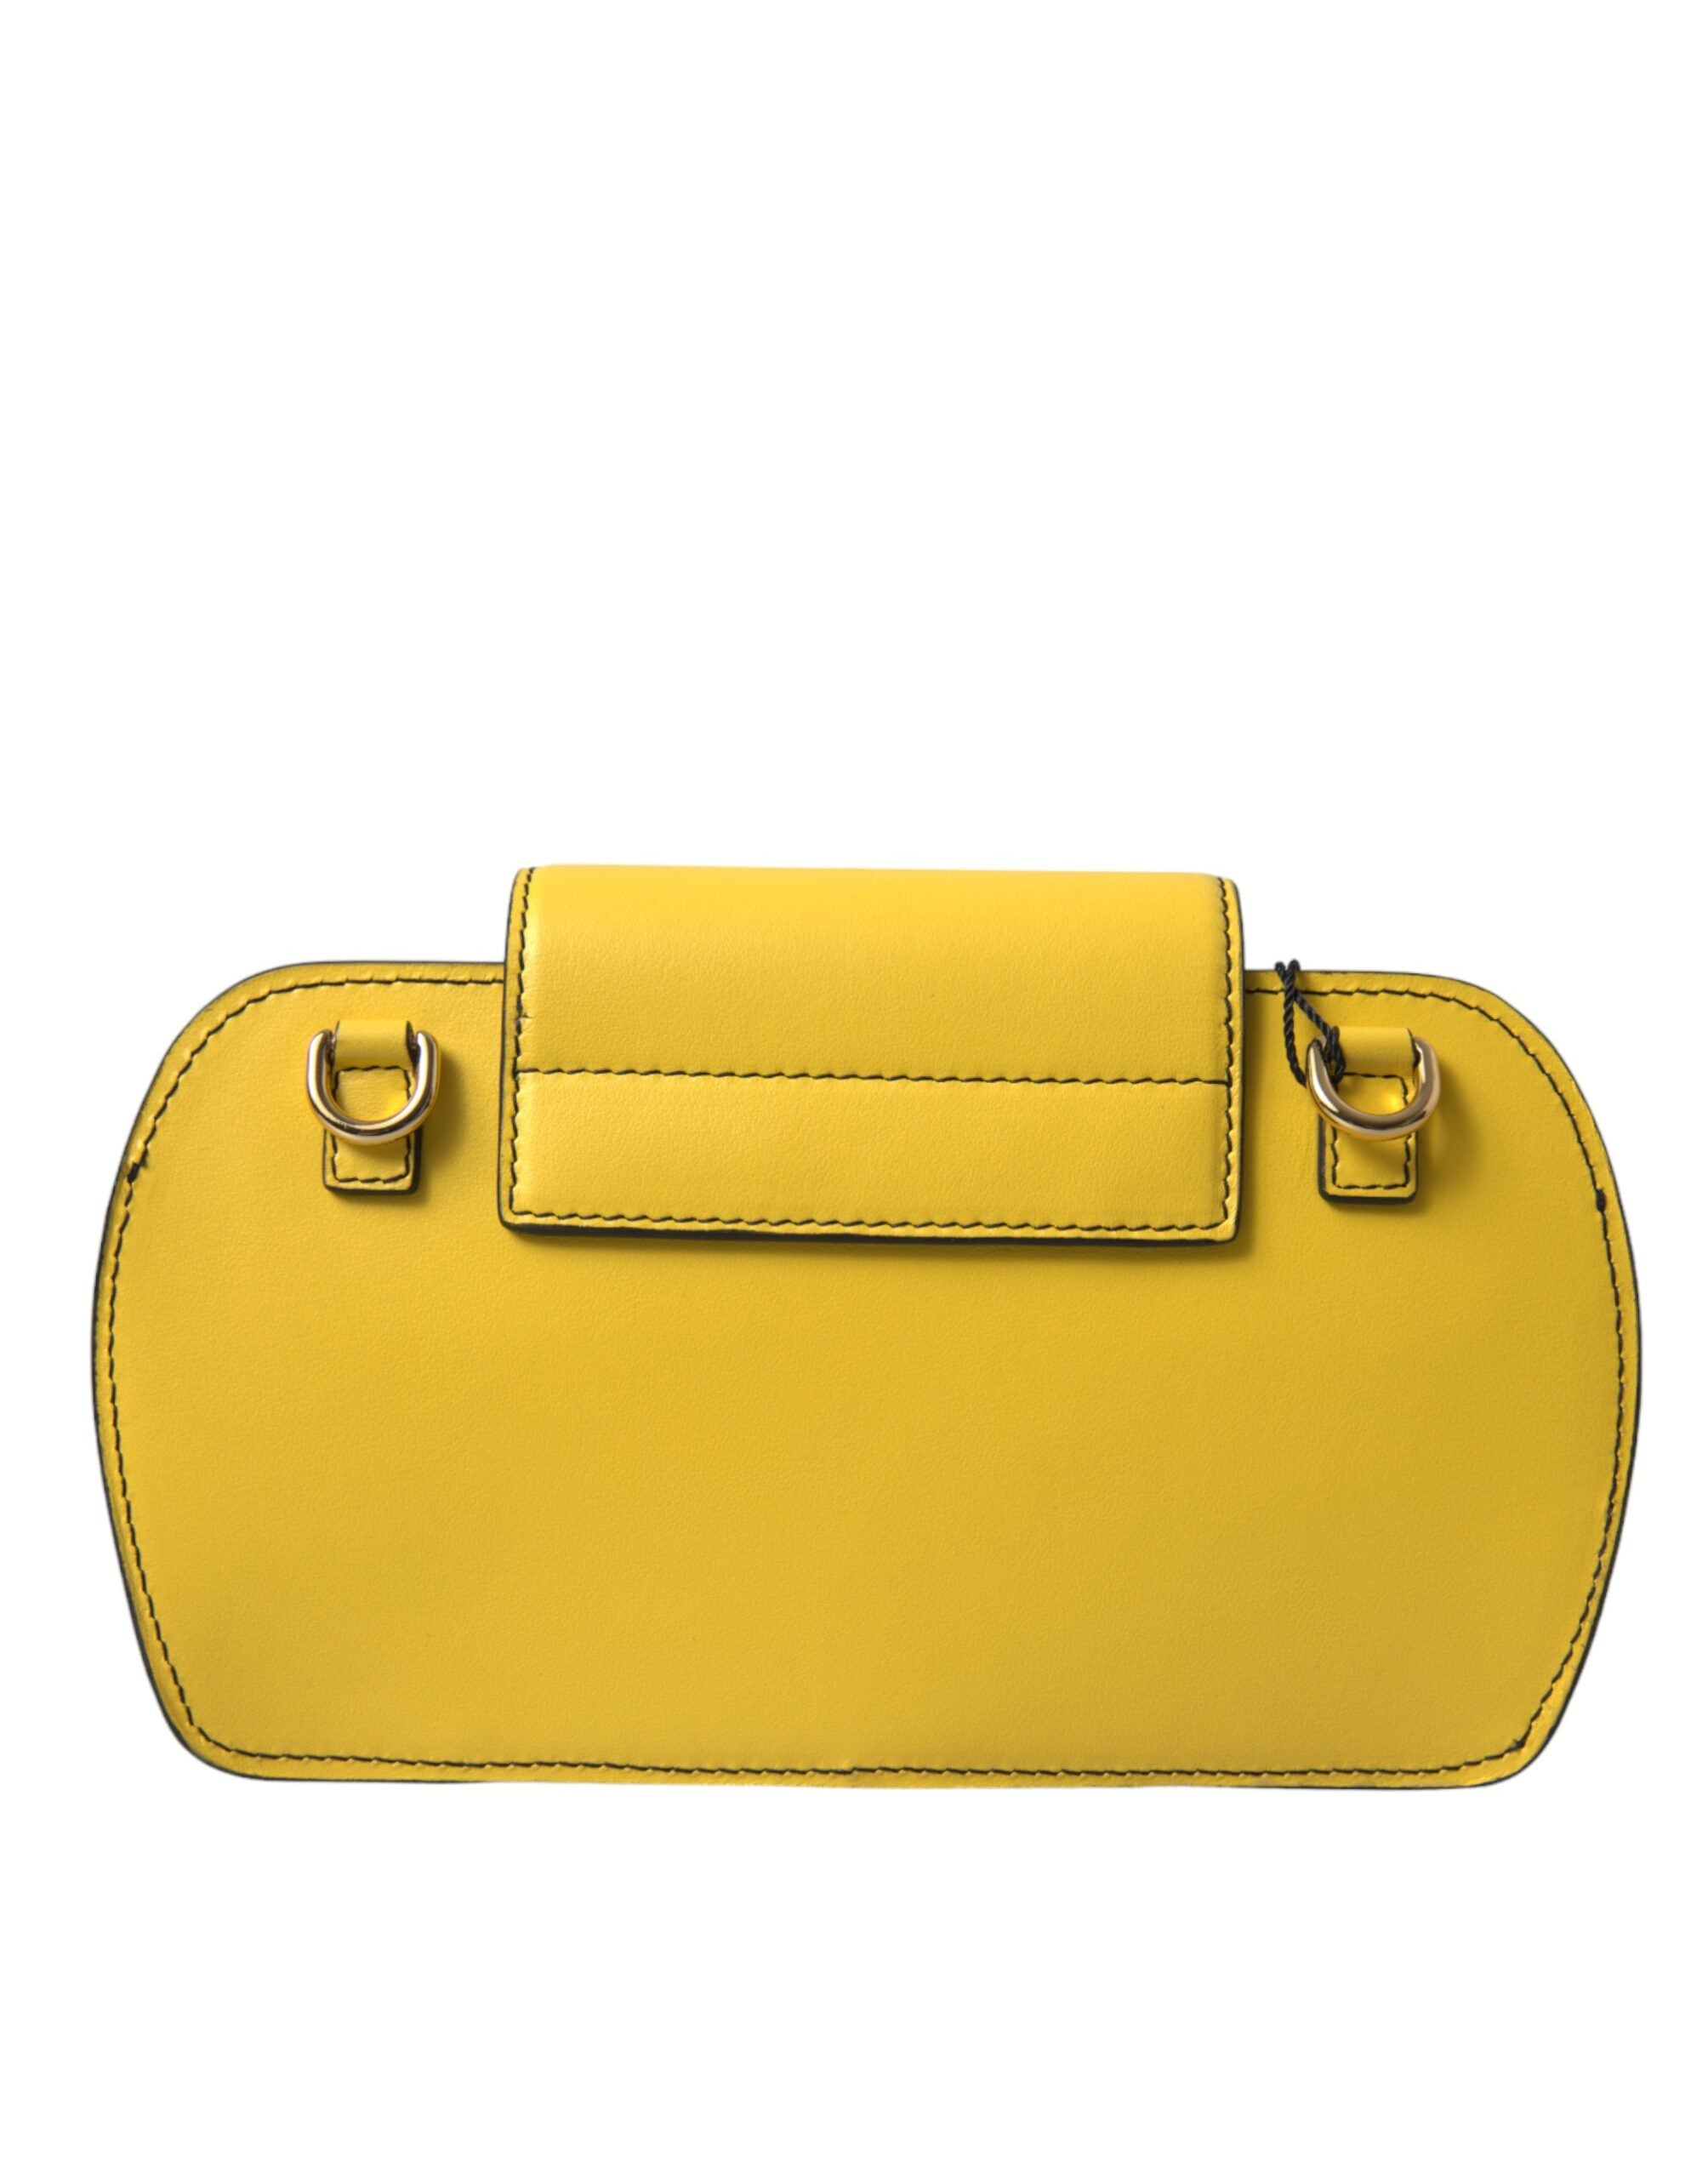 Dolce & Gabbana Yellow Leather DG Logo Eyewear Sunglasses Case Cover Bag